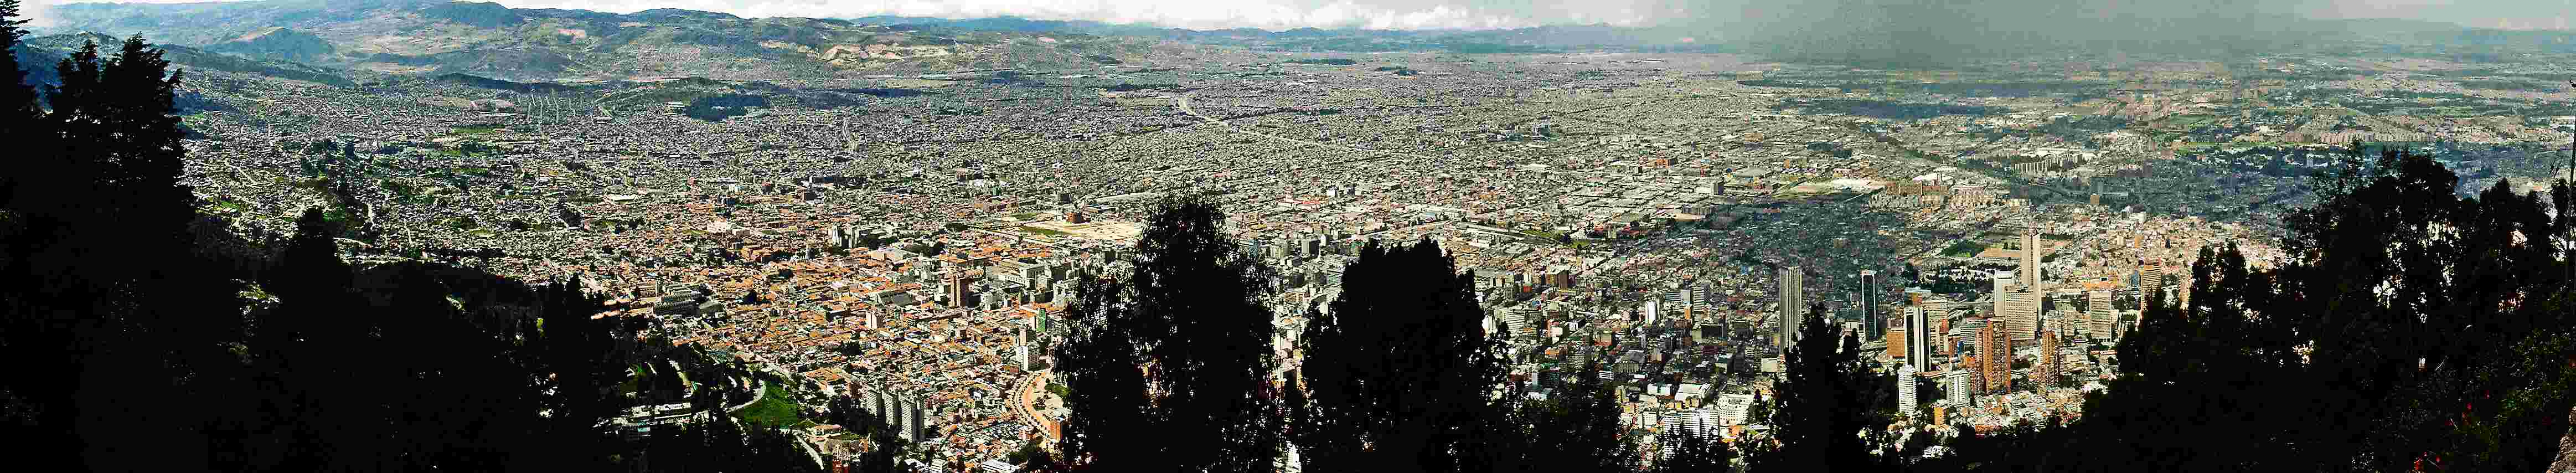 Bogotá. Panorama of the city